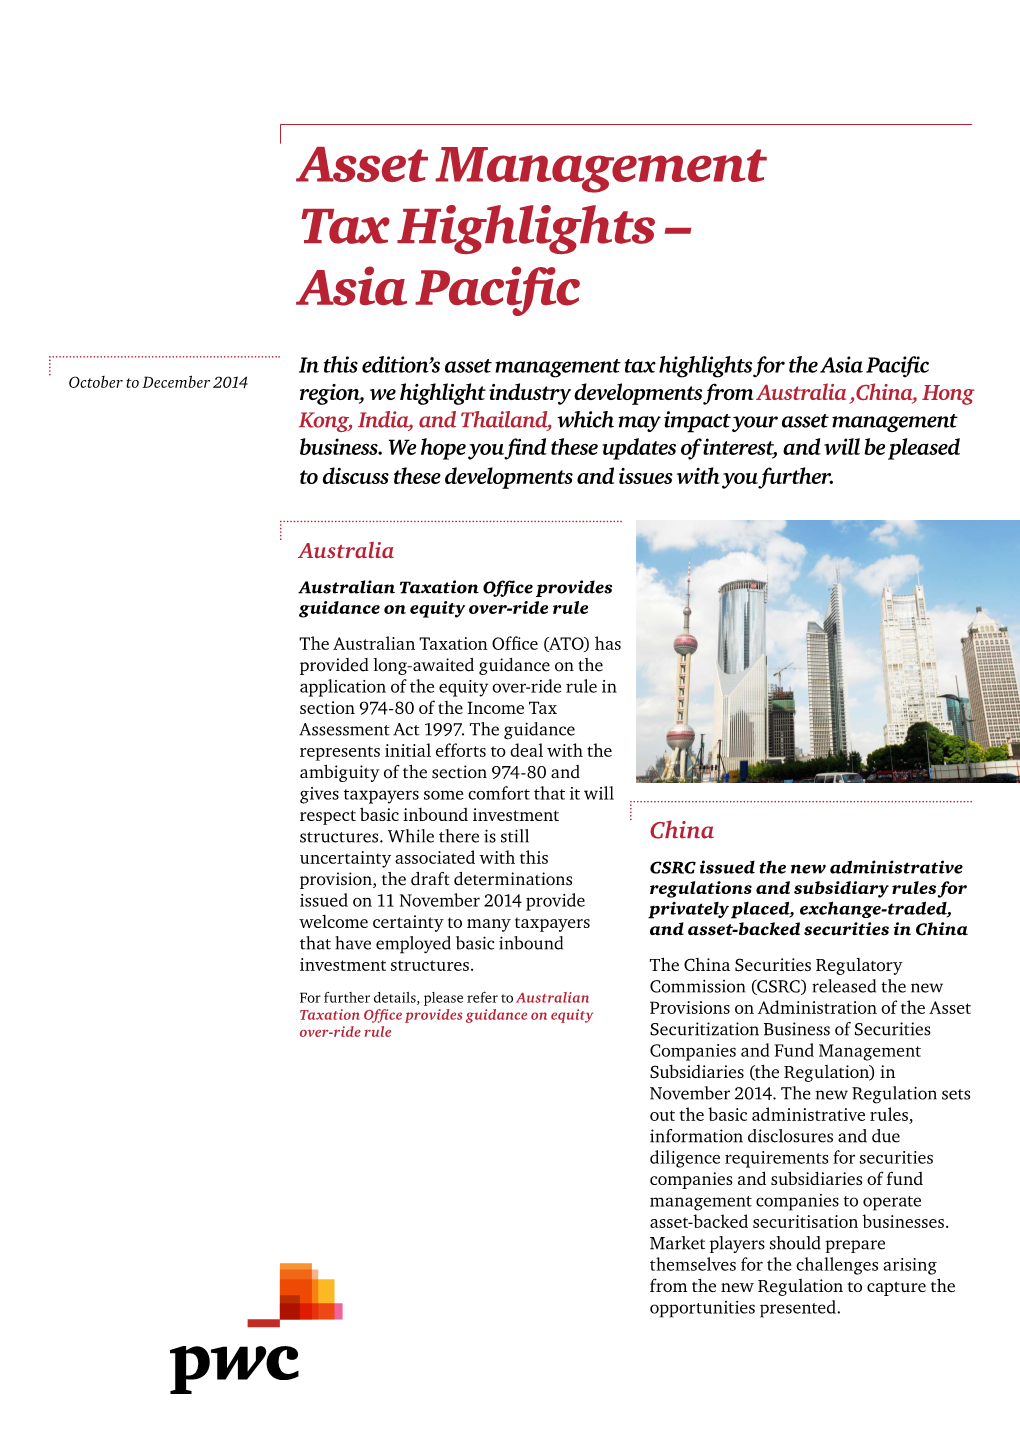 Asset Management Tax Highlights – Asia Pacific